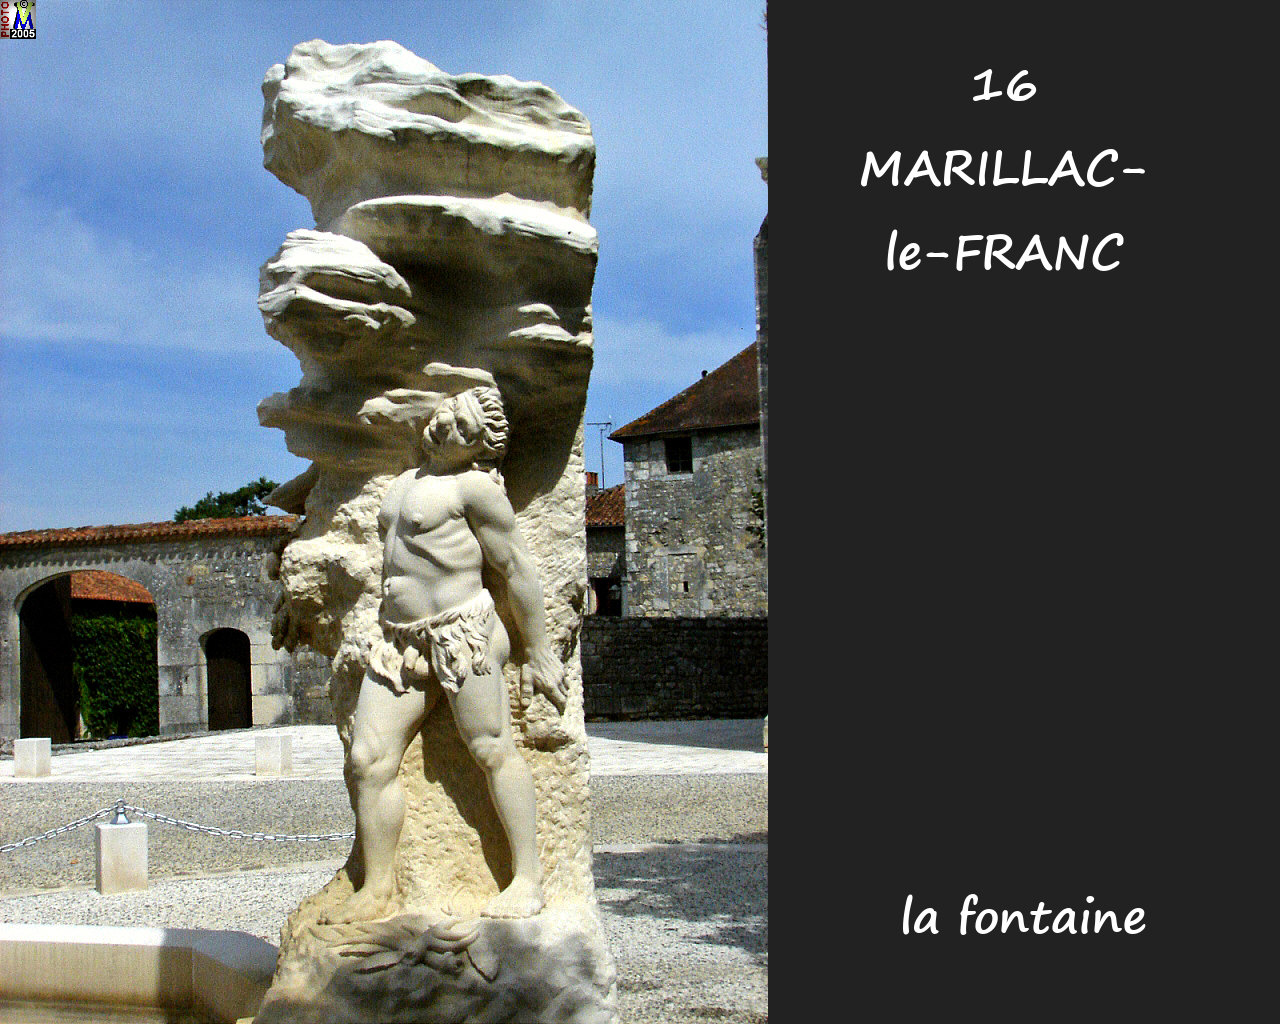 16MARILLAC-FRANC_fontaine_102.jpg